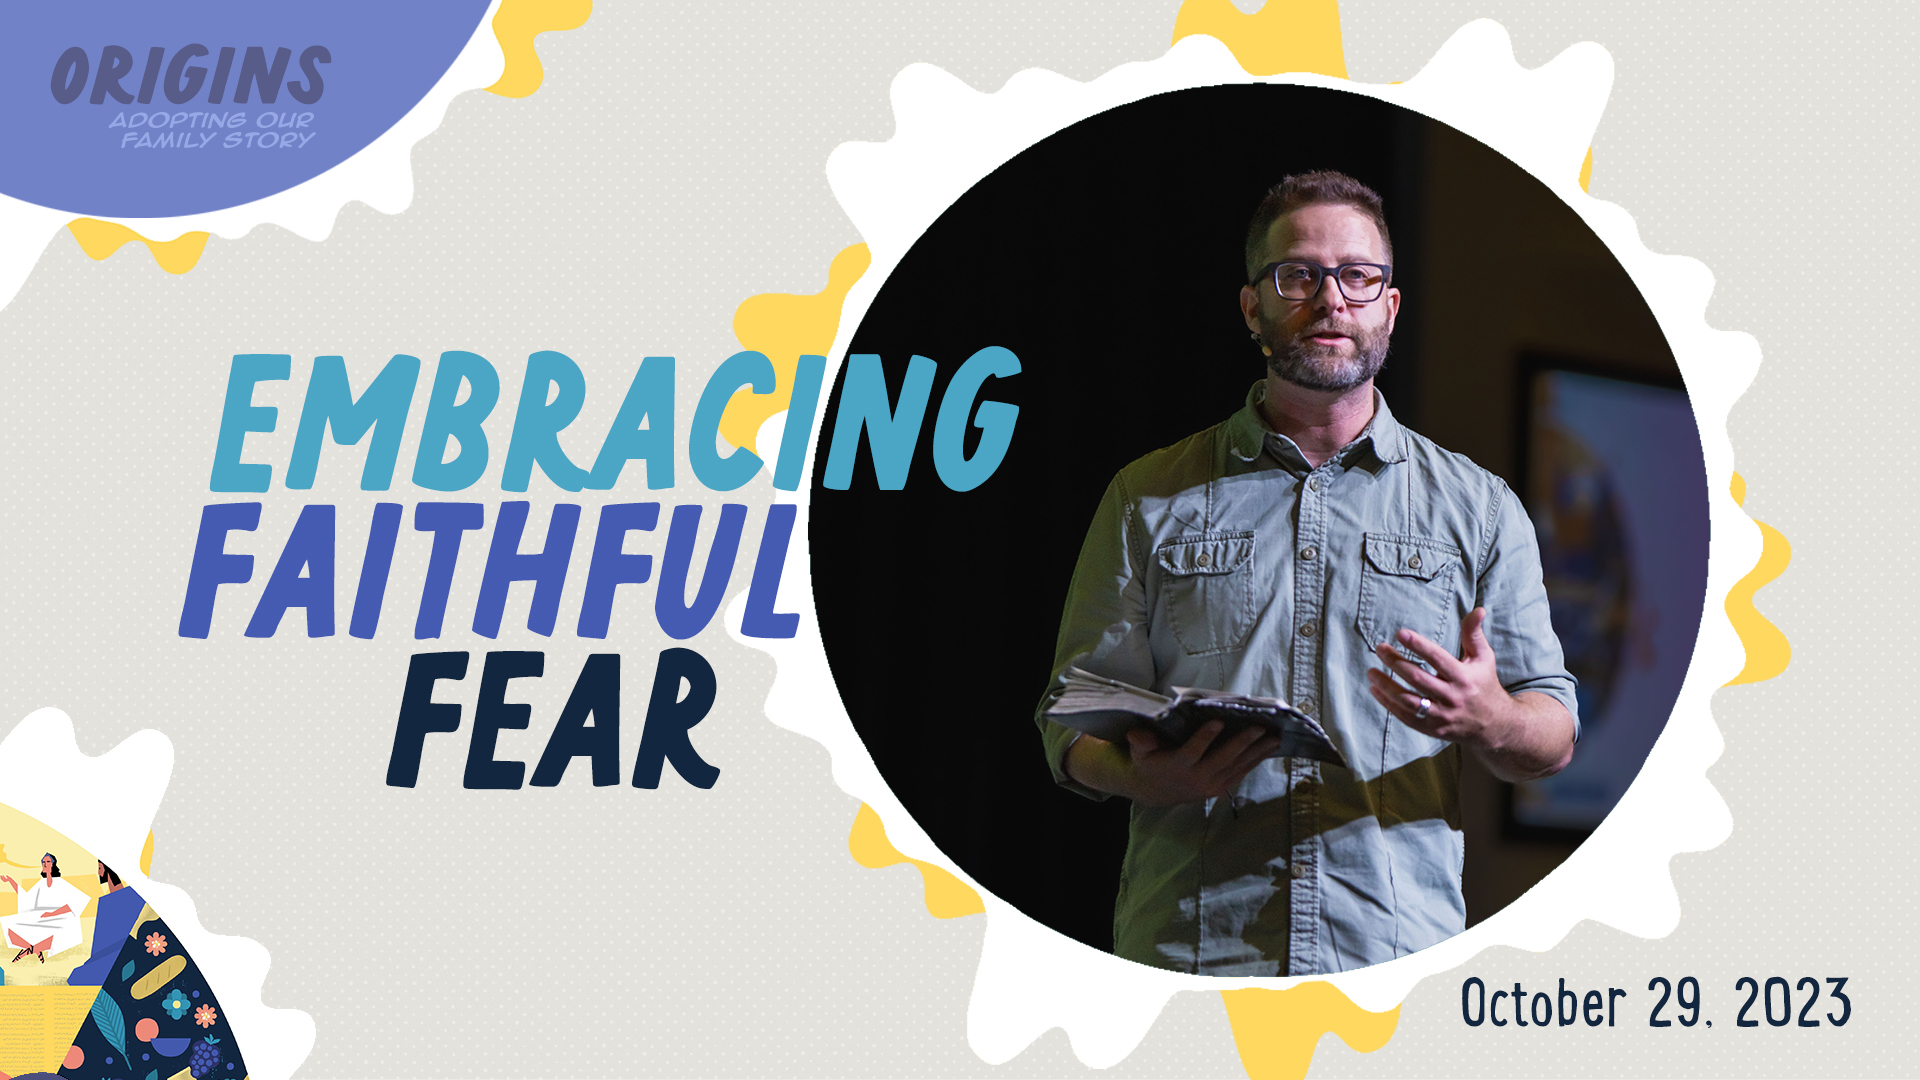 Embracing Faithful Fear Image